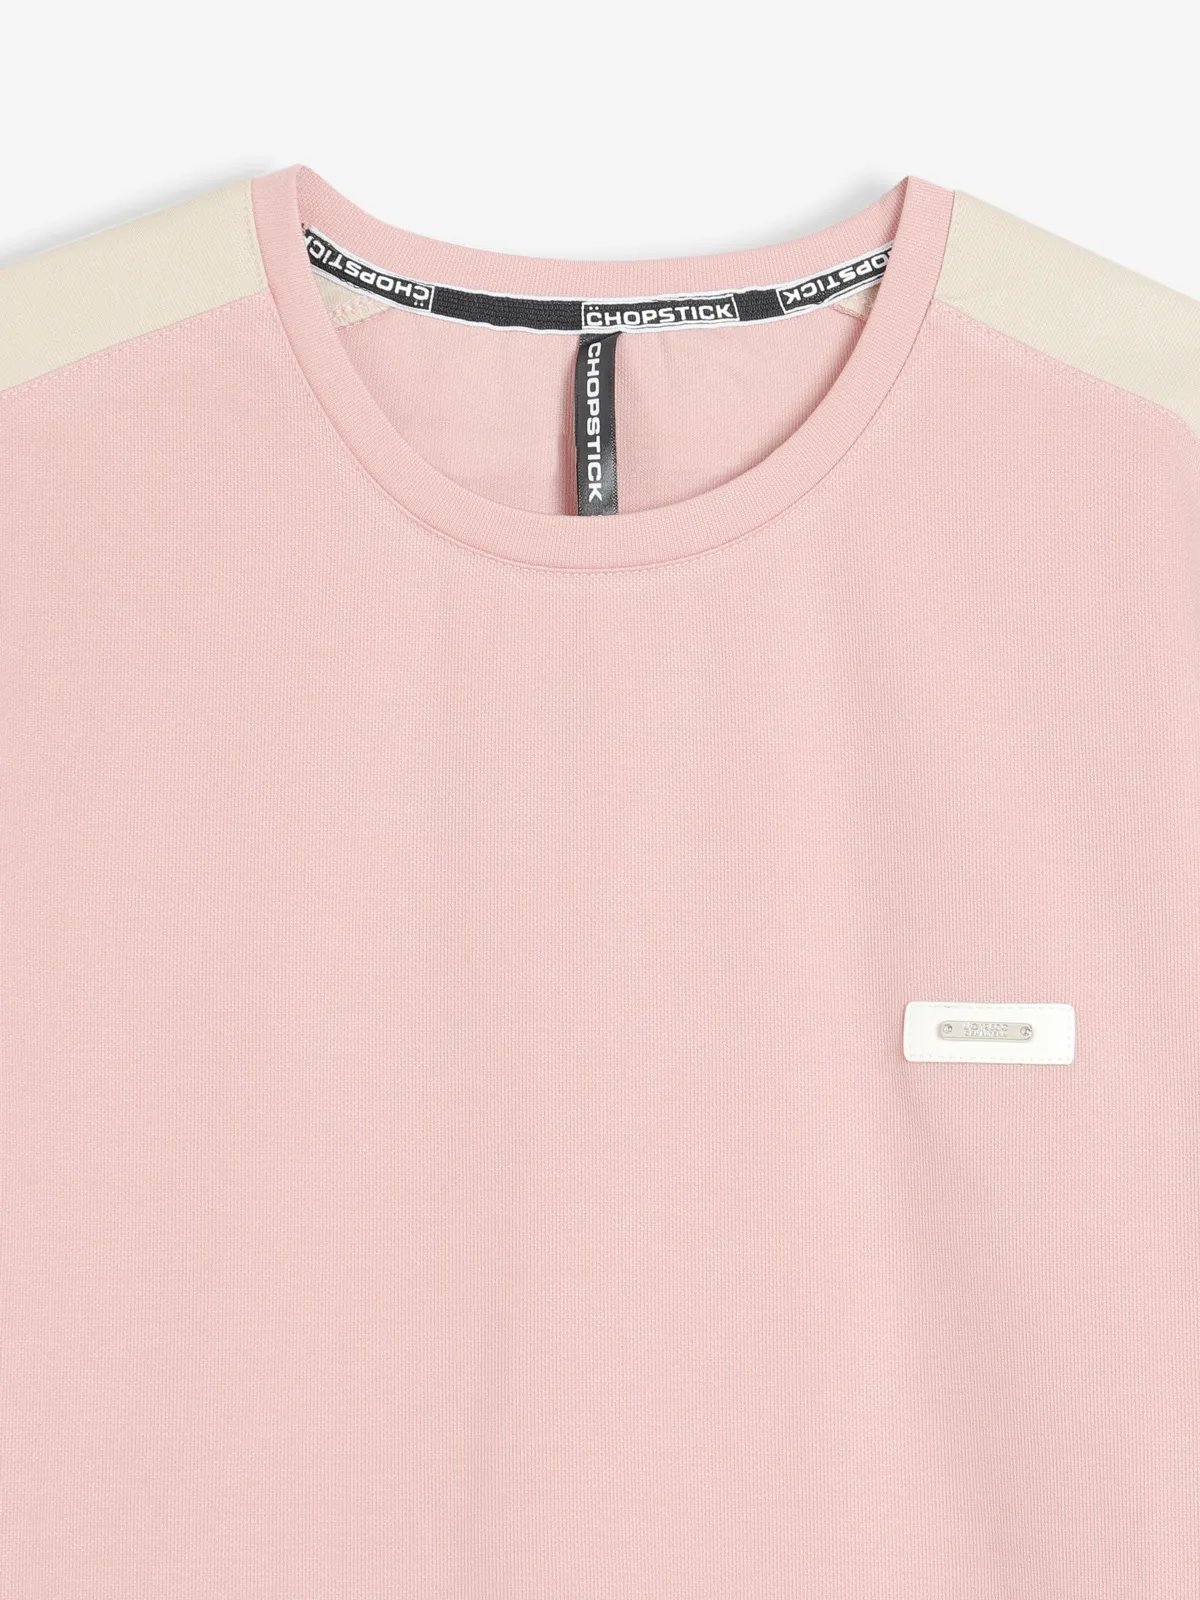 Chopstick cotton pink slim fit t shirt